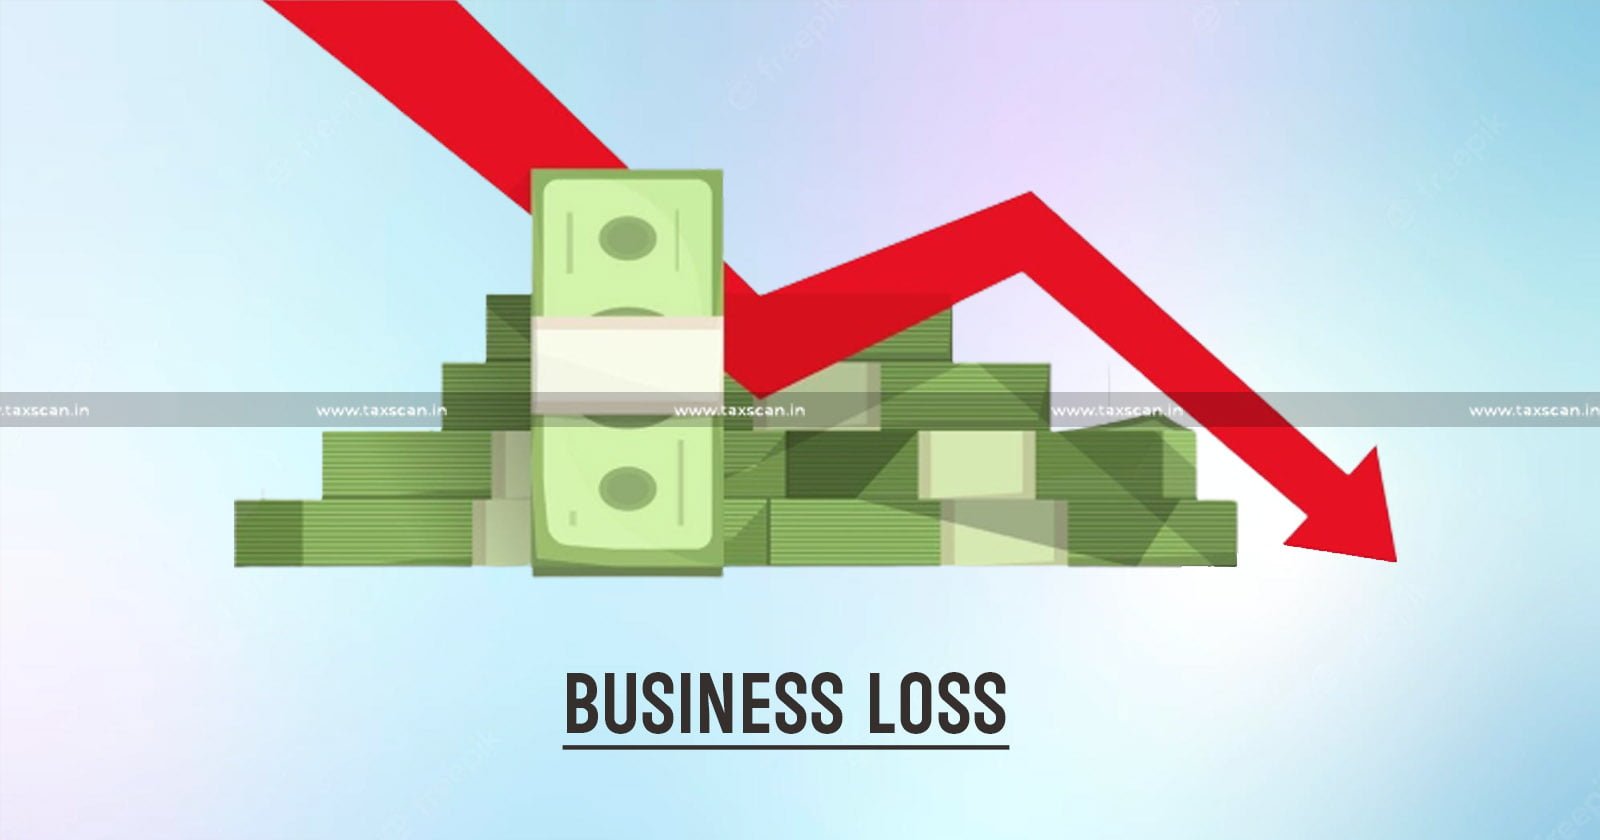 AO - ITAT - claim - inx news - business loss - business activity - ITAT allows Business Loss Claim - taxscan